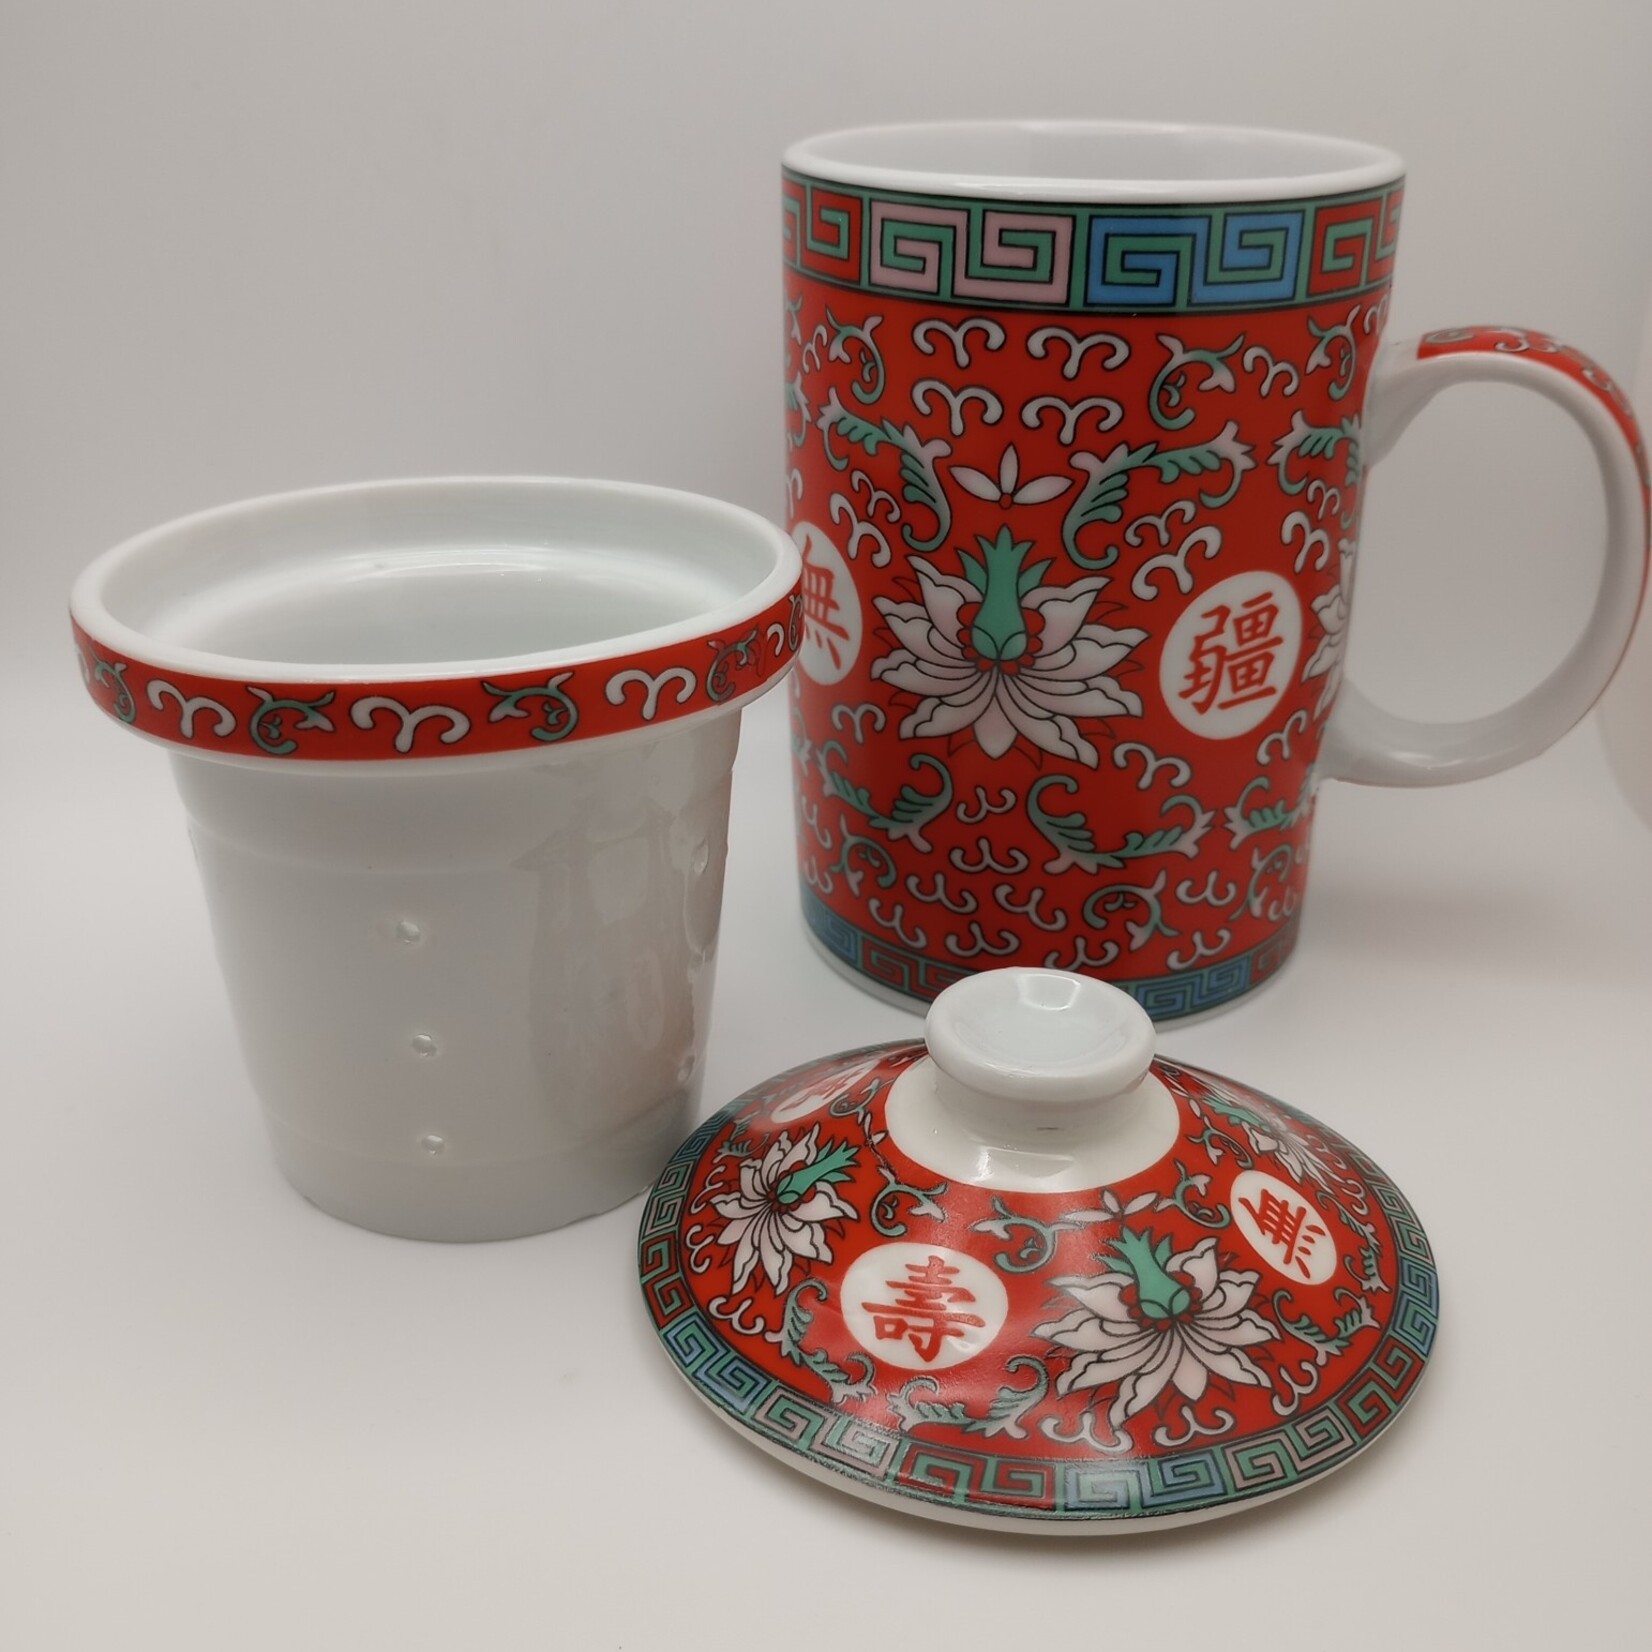 Chinese Ceramic Mug with Ceramic Infuser: